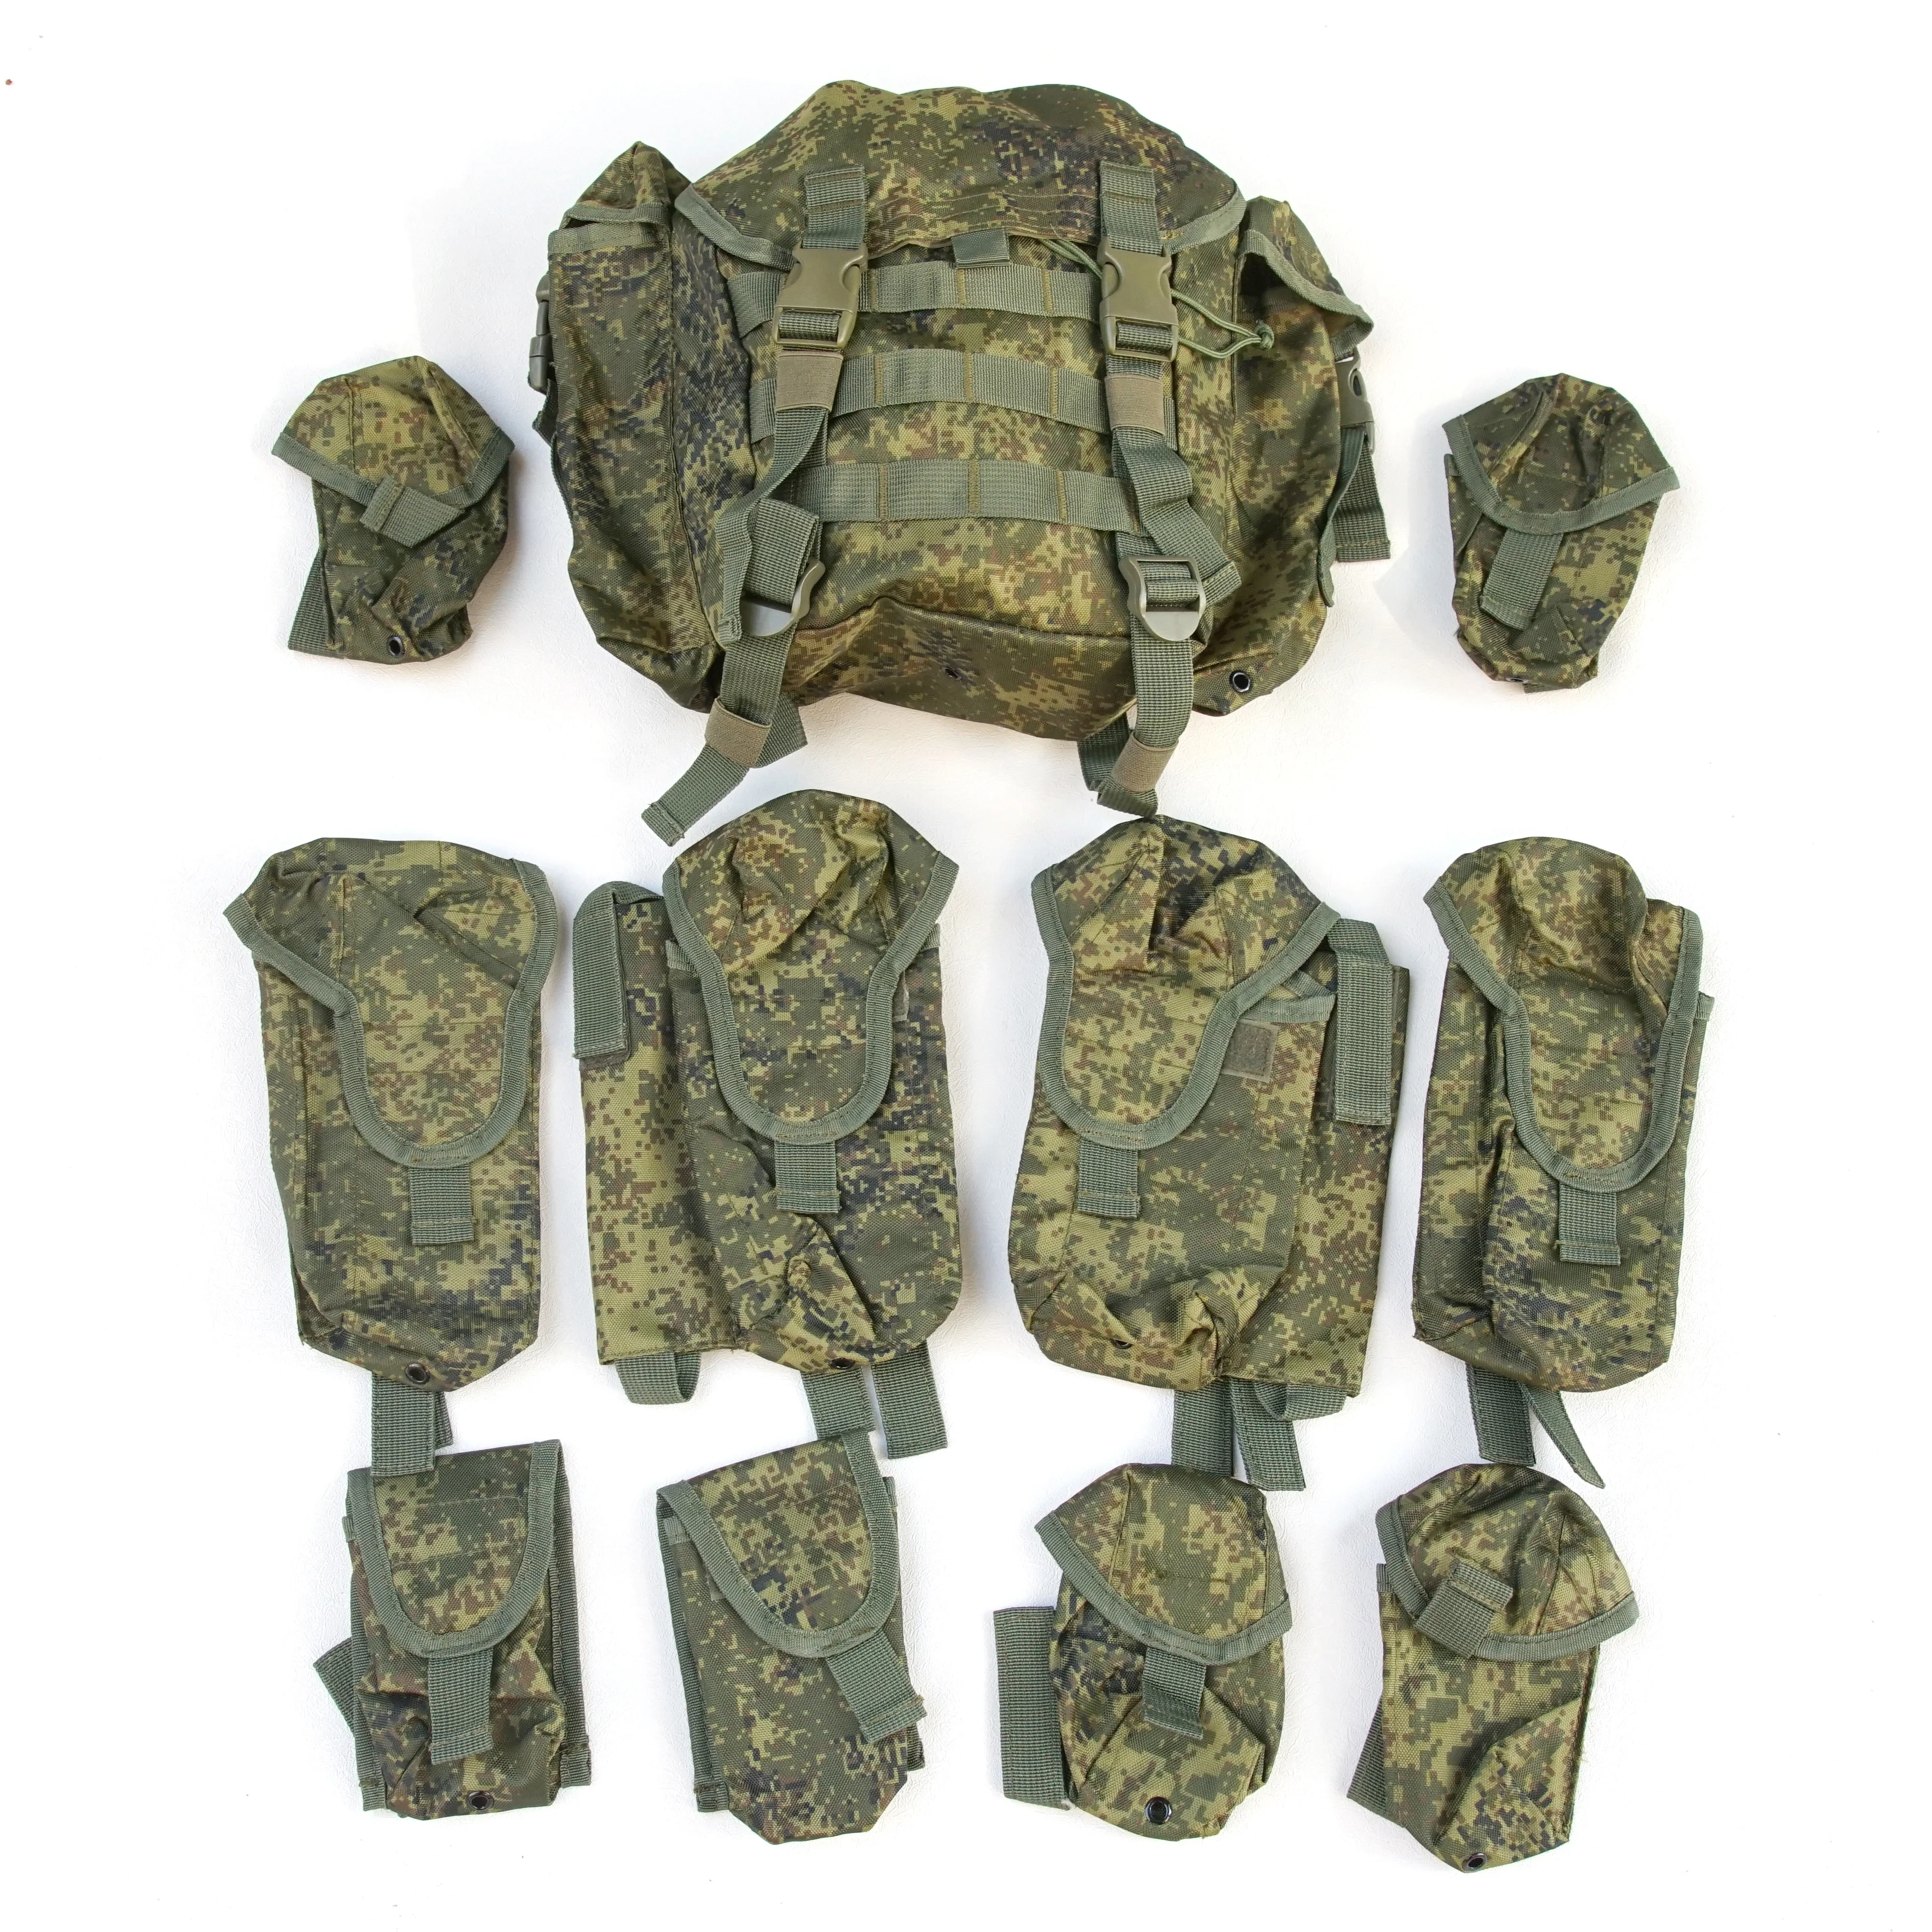 SMTP E22-3 6B45 Vest sub pack set 11 russian emr bags russian military bag set